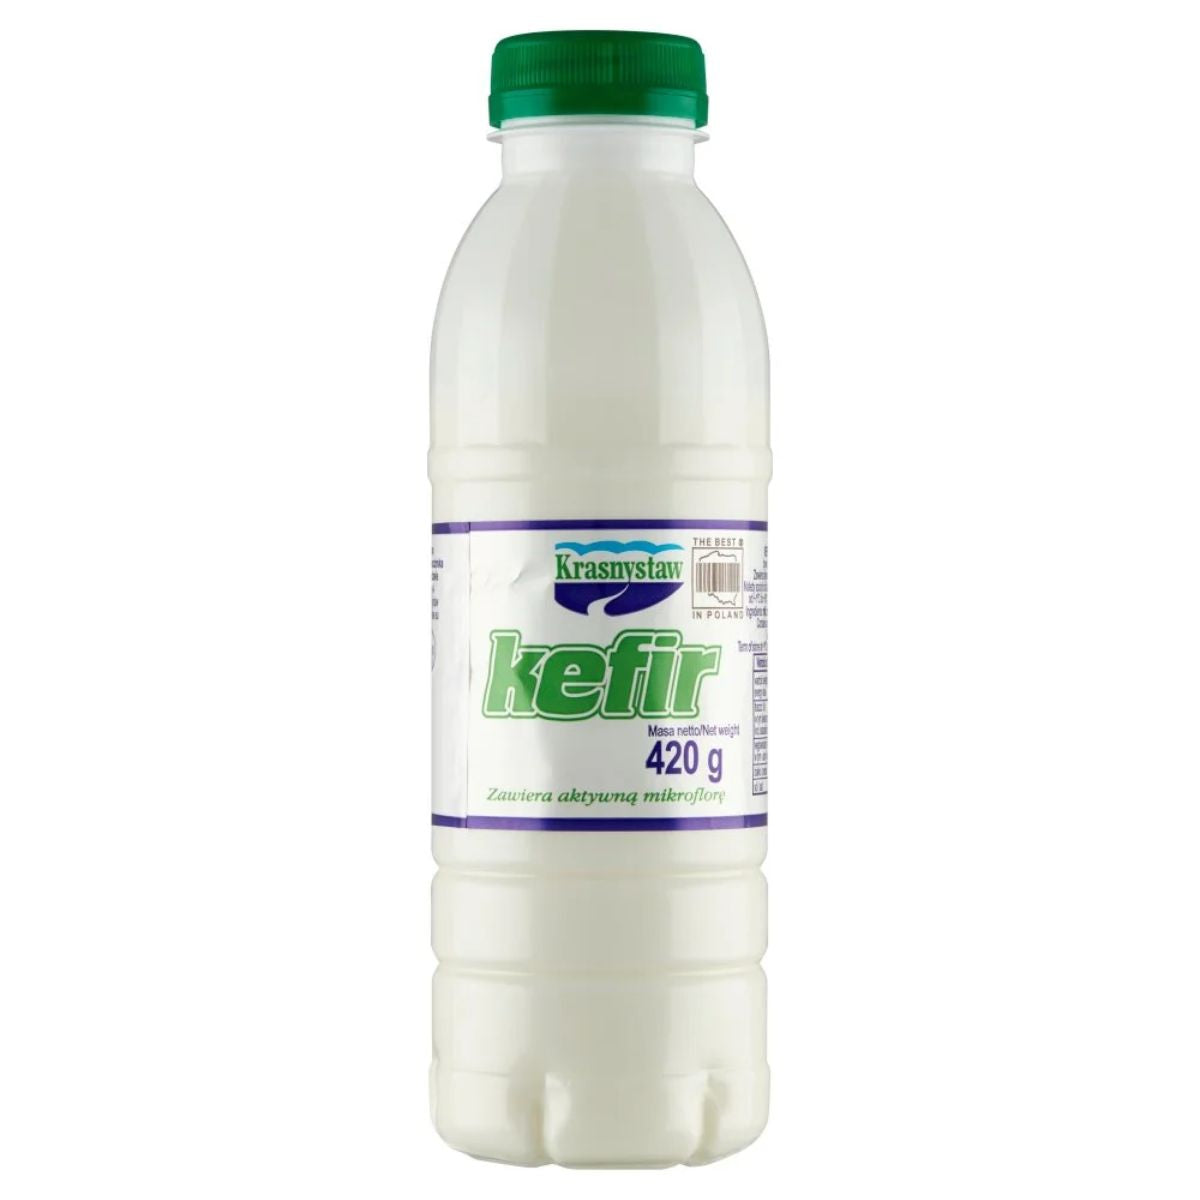 A bottle of Krasnystaw - Kefir - 420g on a white background.